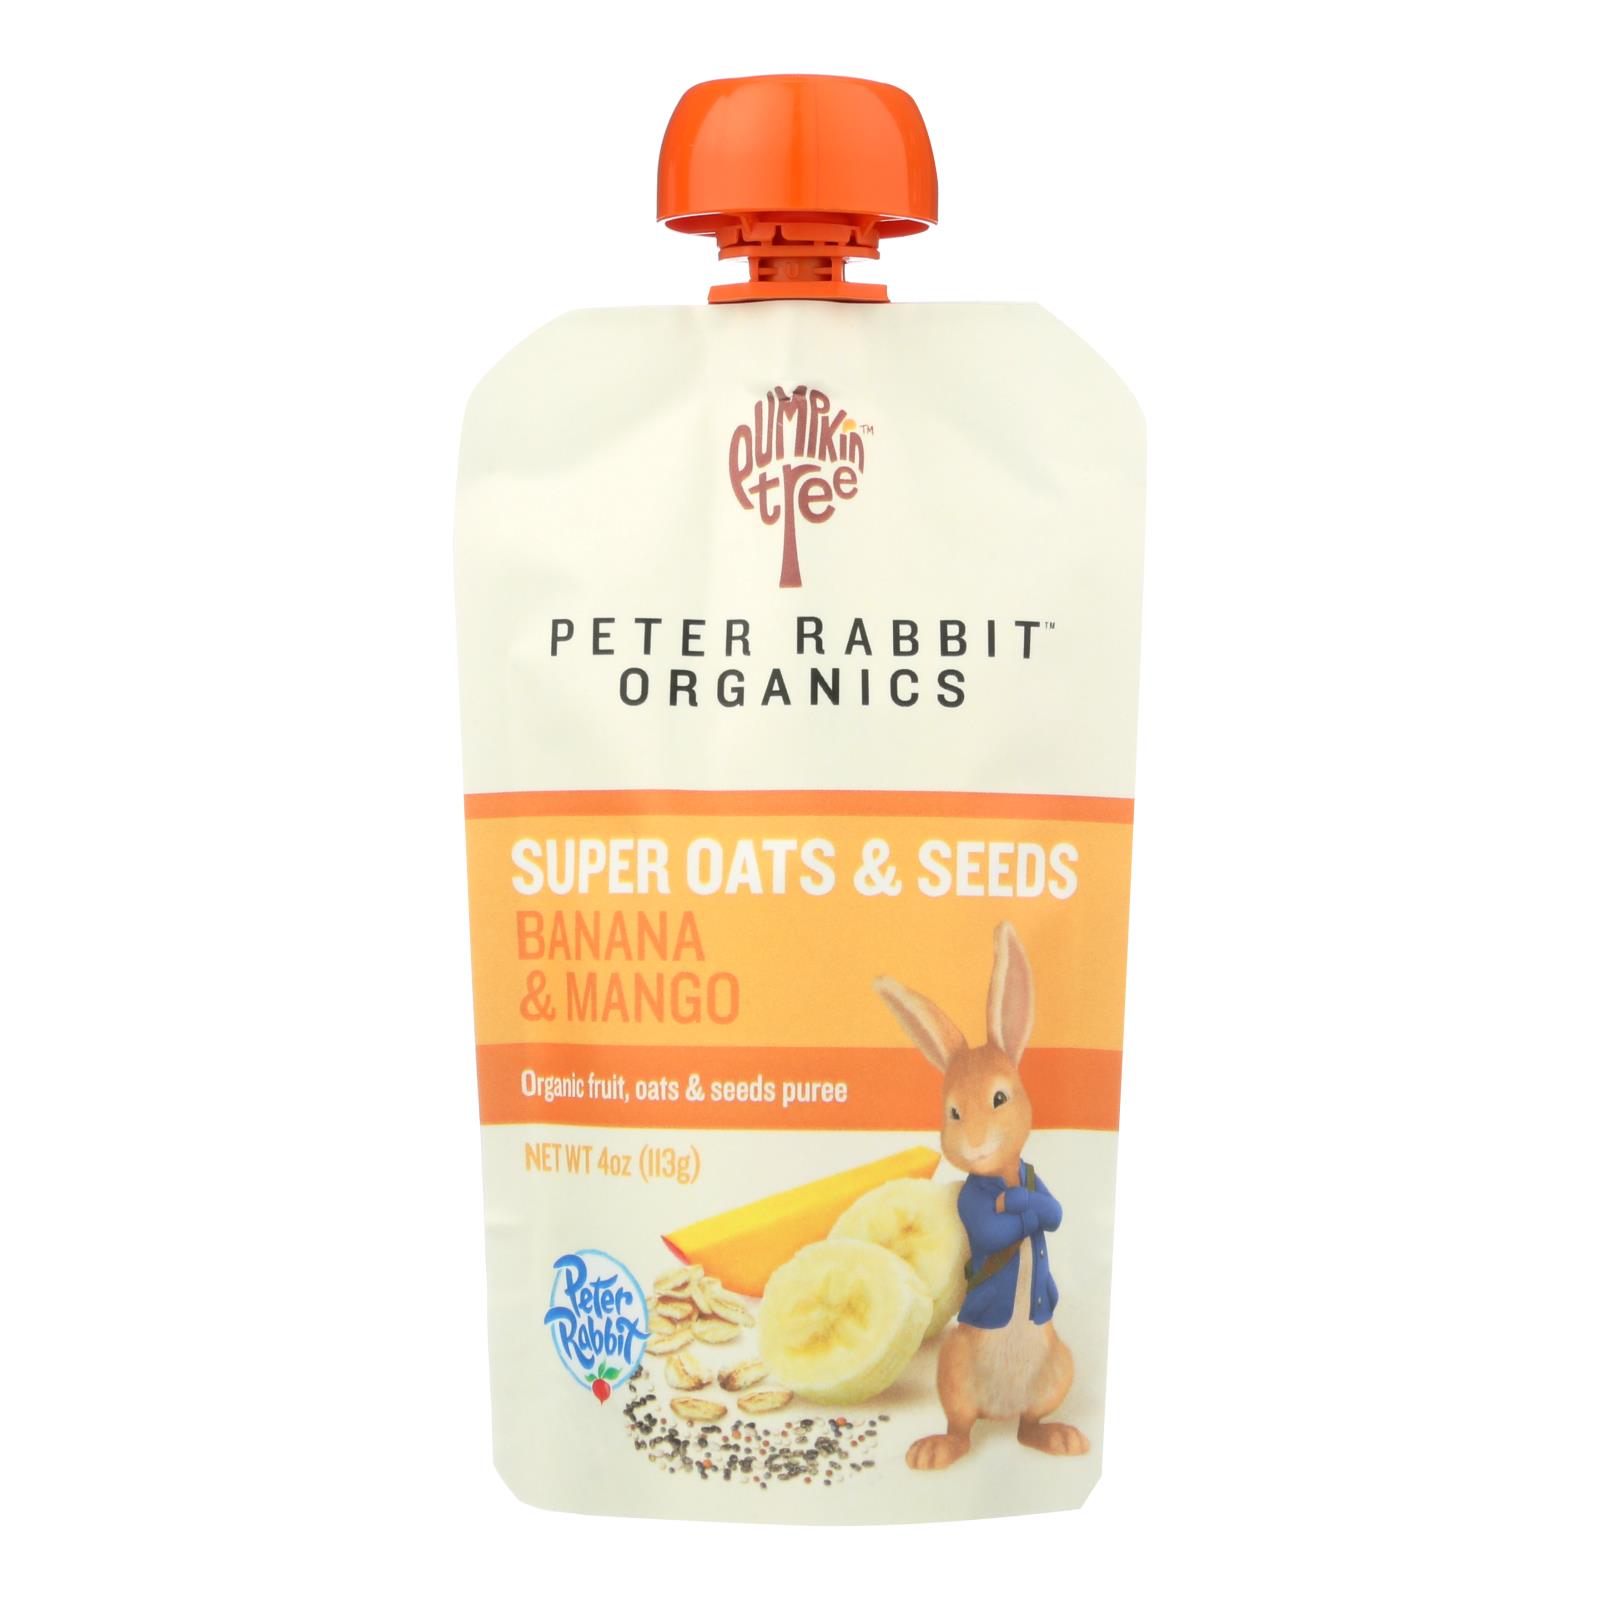 Peter Rabbit Organics - Oats&seeds Bana&mango - 10개 묶음상품 - 4 OZ